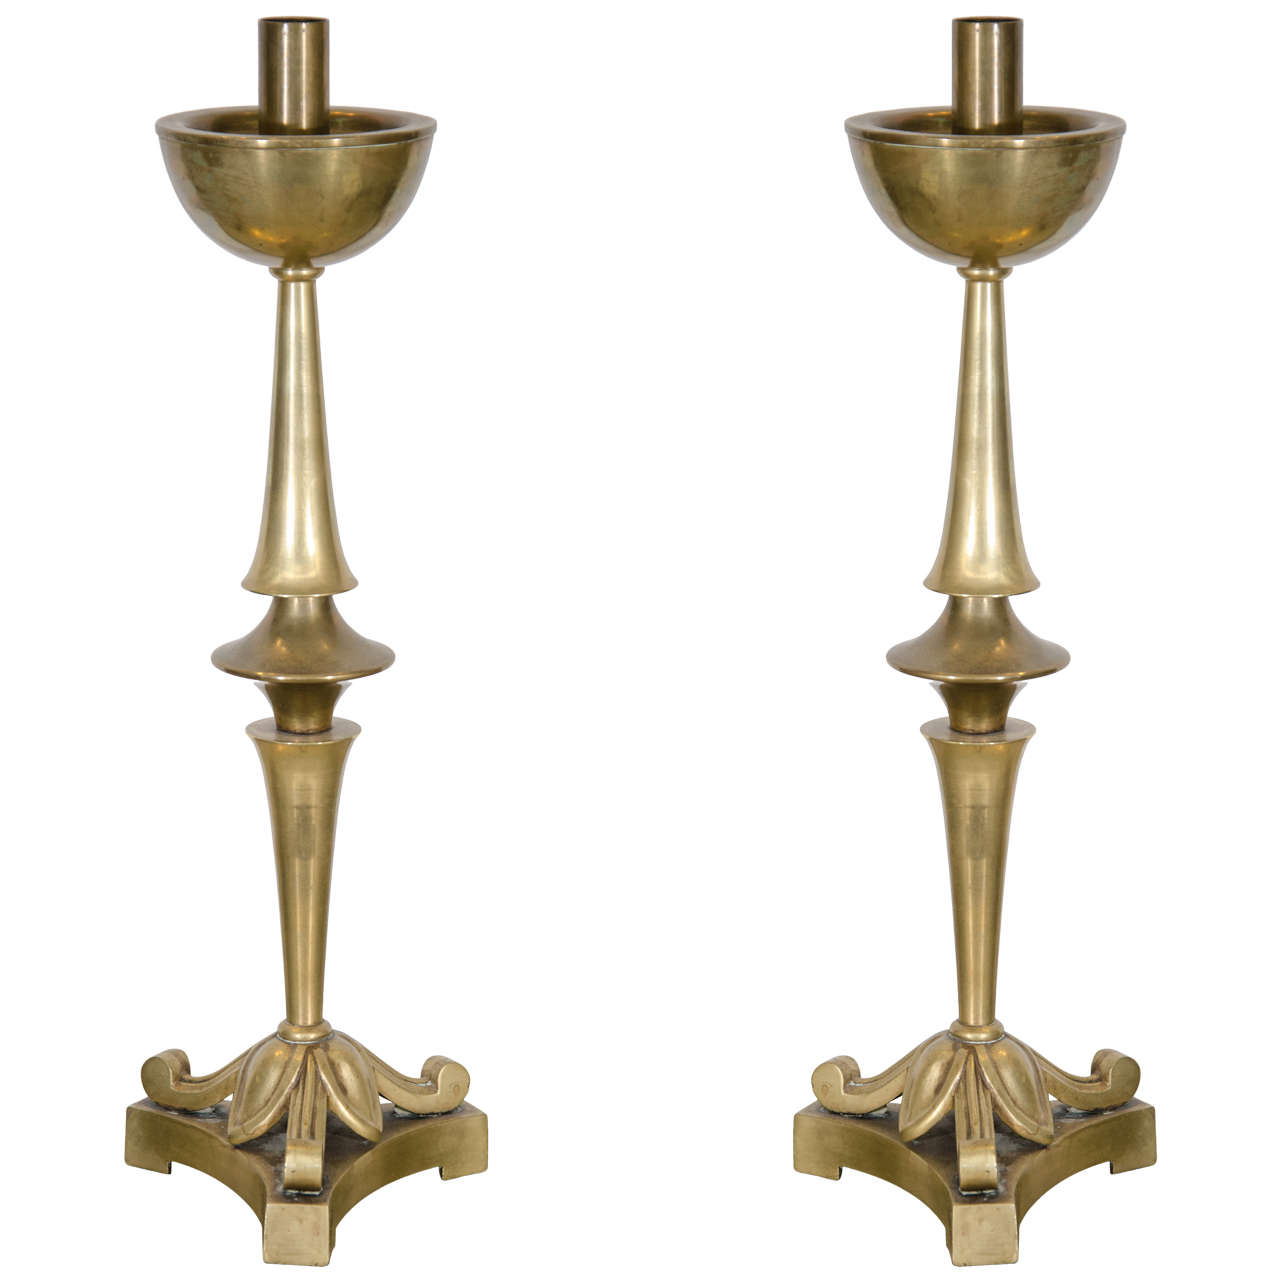 Stunning Pair of Vintage Tall Art Nouveau Brass Candlestick Holders